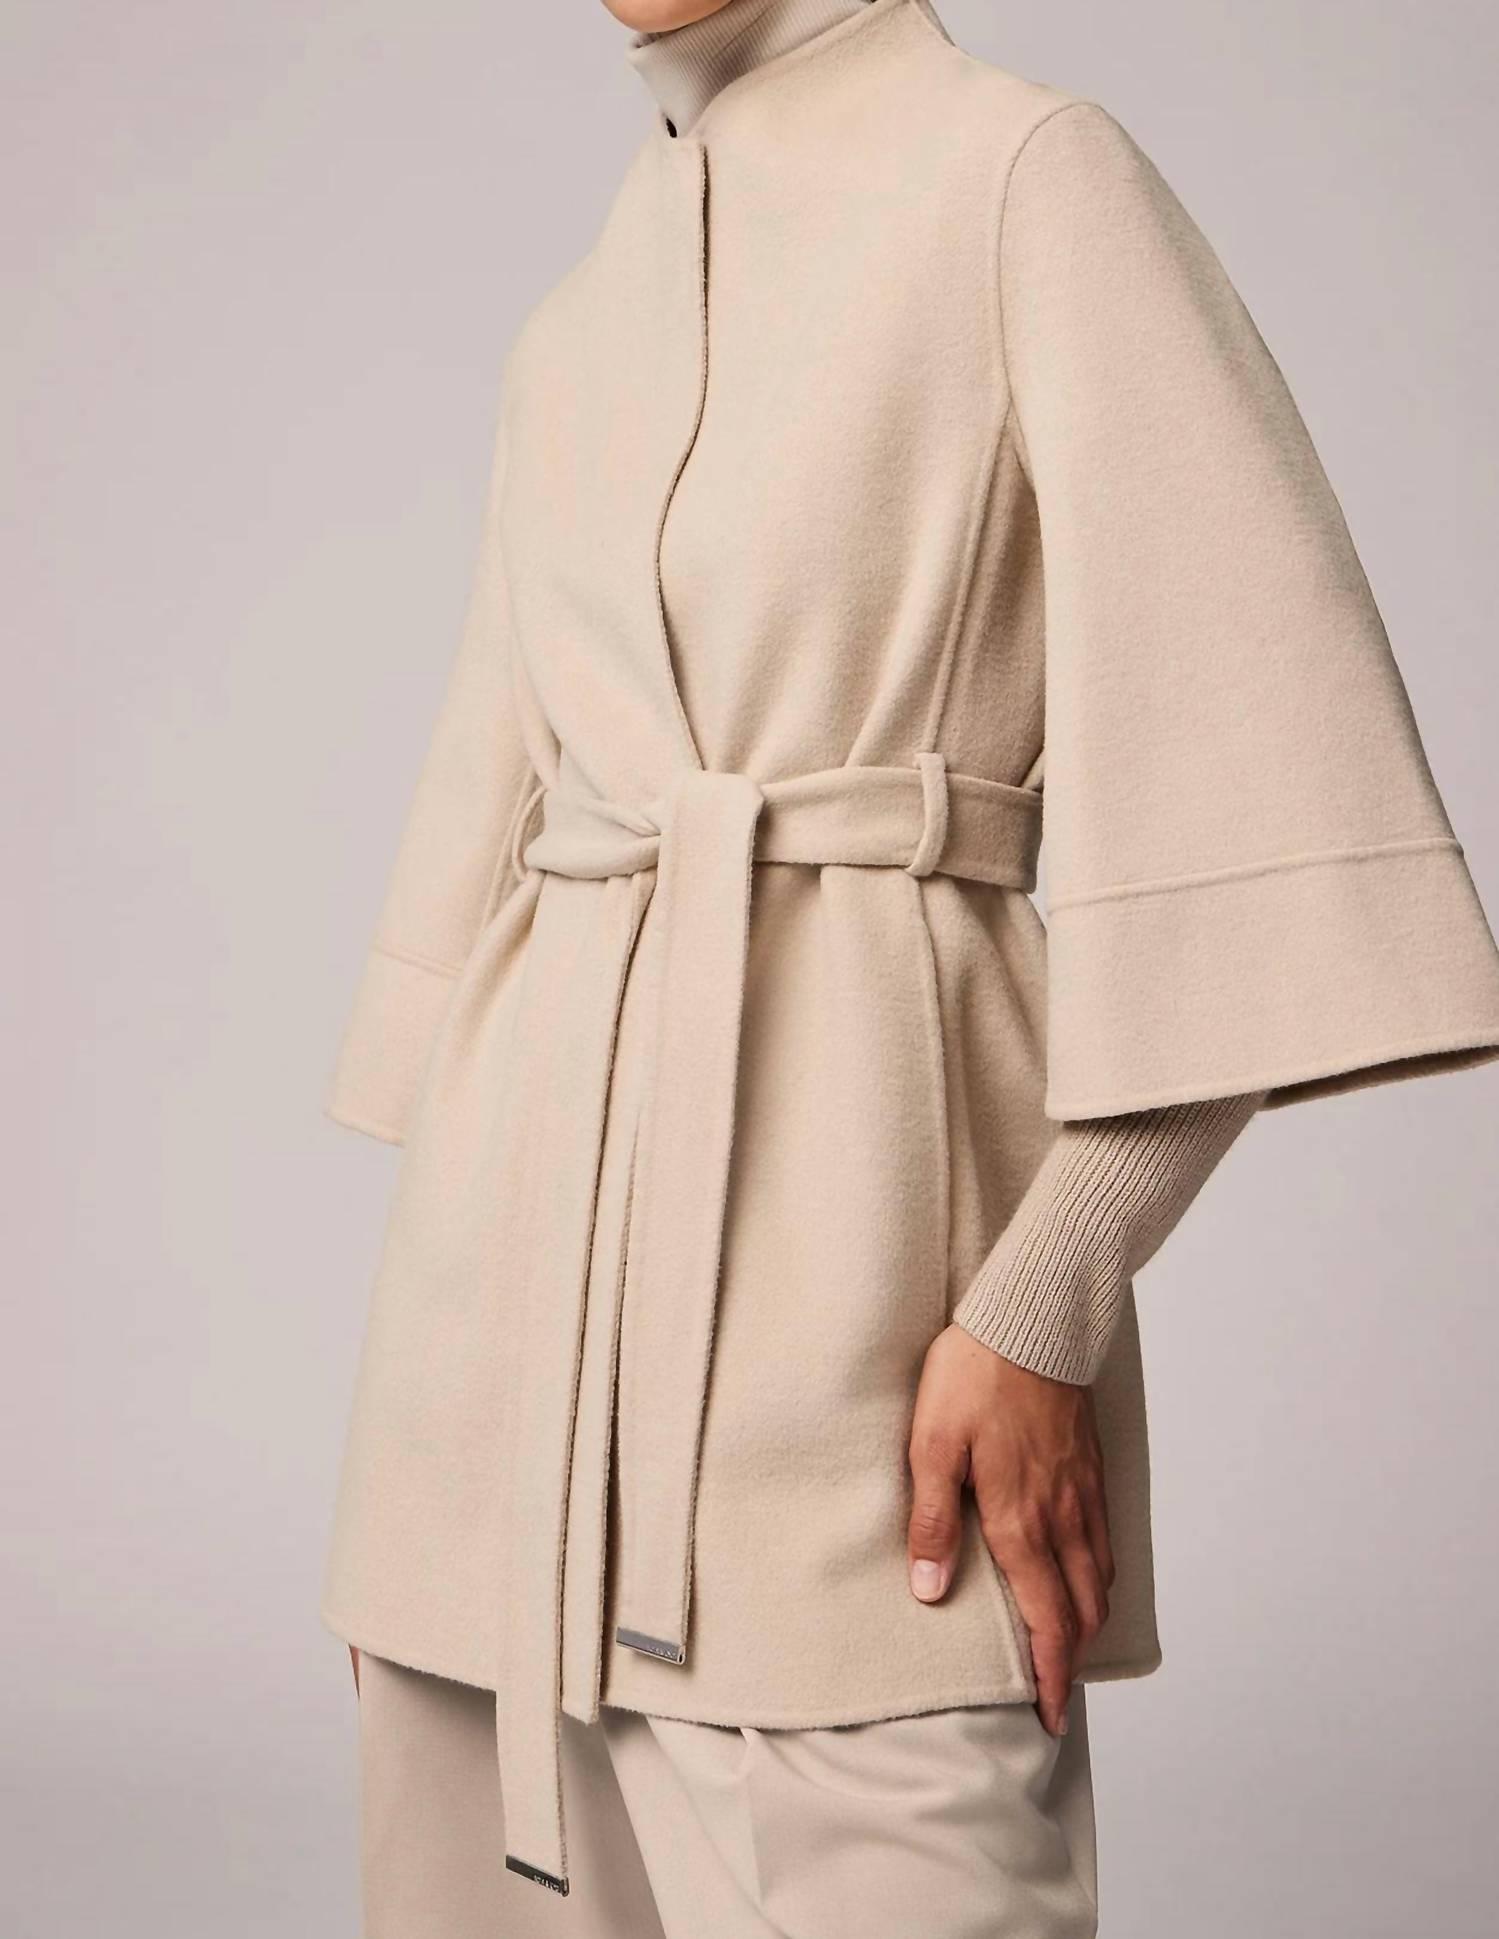 SOIA & KYO Selma Light Wool Coat In Hush in Natural | Lyst